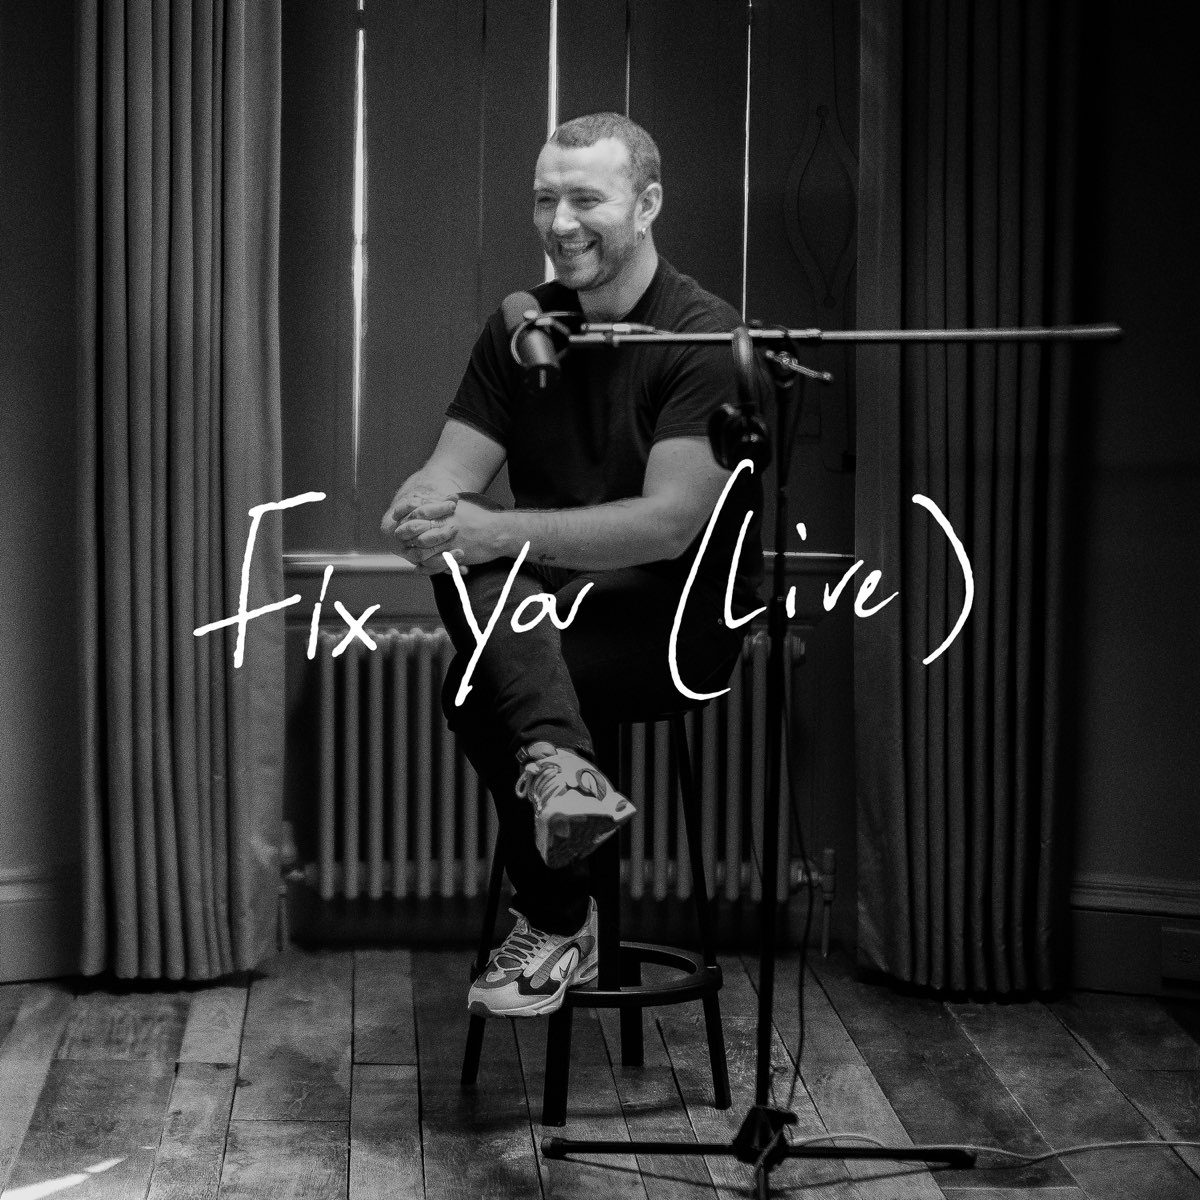 Fix You (Live) - Single - Album by Sam Smith - Apple Music